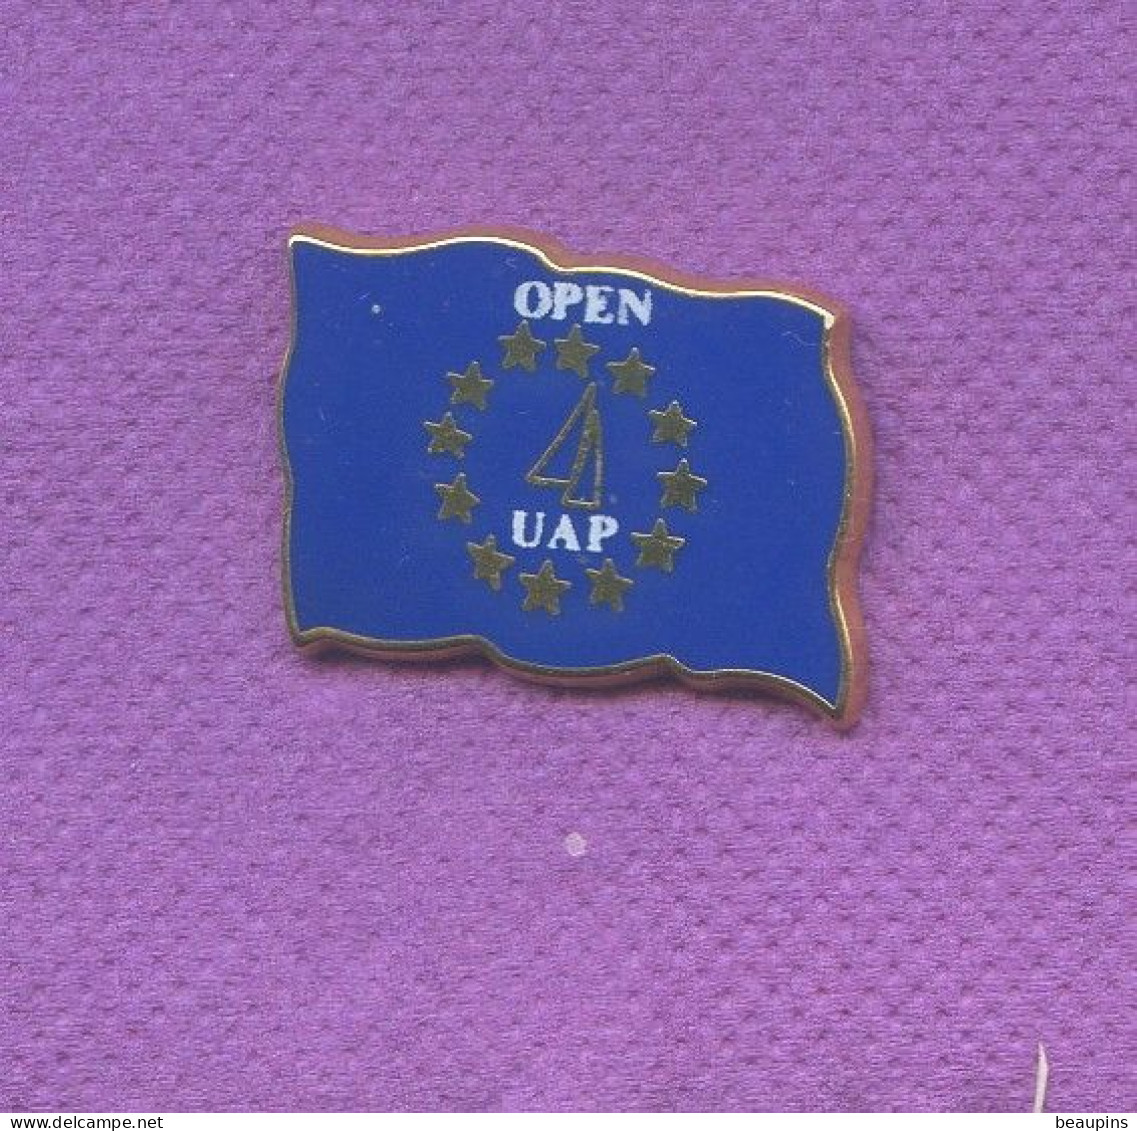 Rare Pins Voile Open Assurance Uap Drapeau Europe Zamac Starpins L399 - Voile